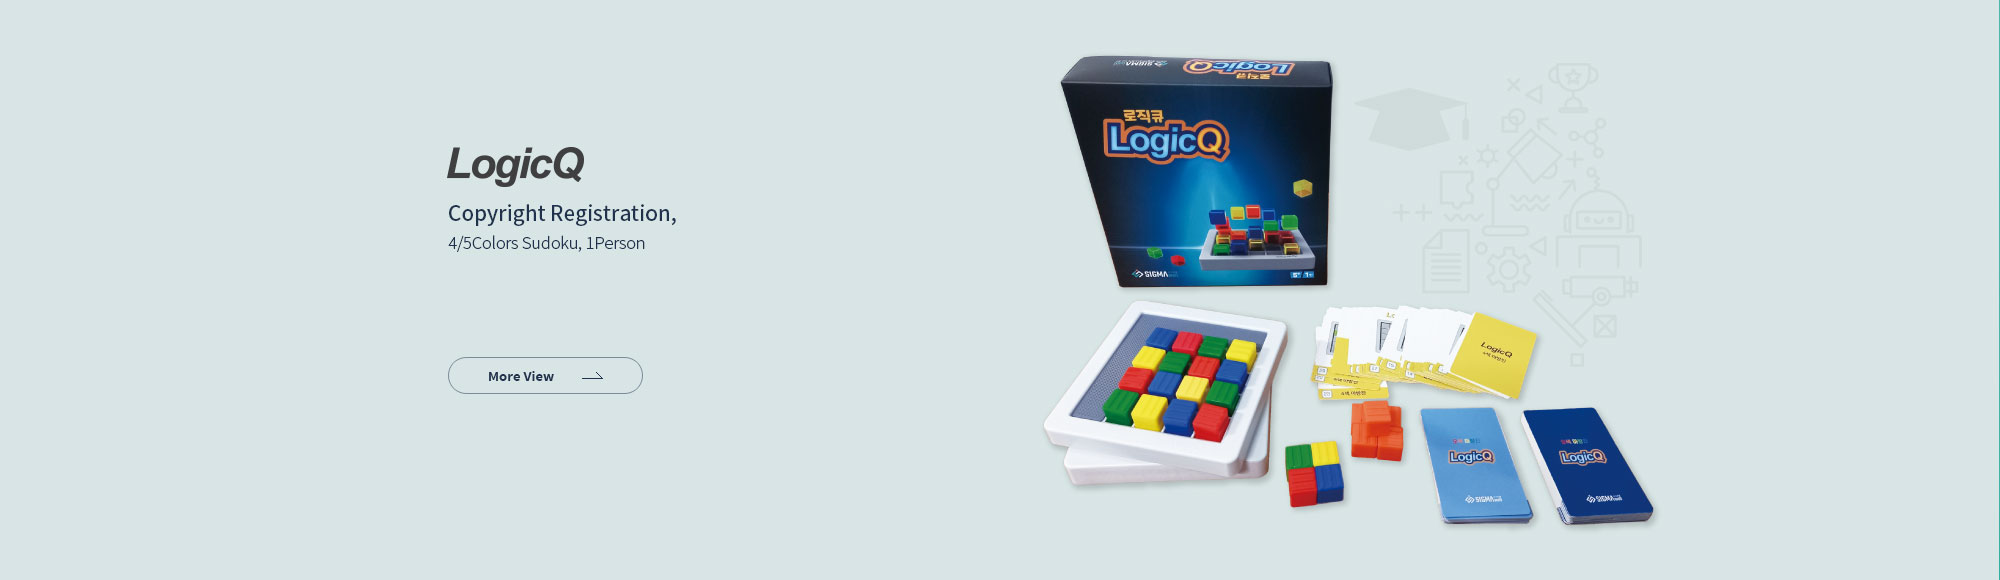 LogicQ
Copyright Registration,
4/5 Colores Sudoku, 1Person